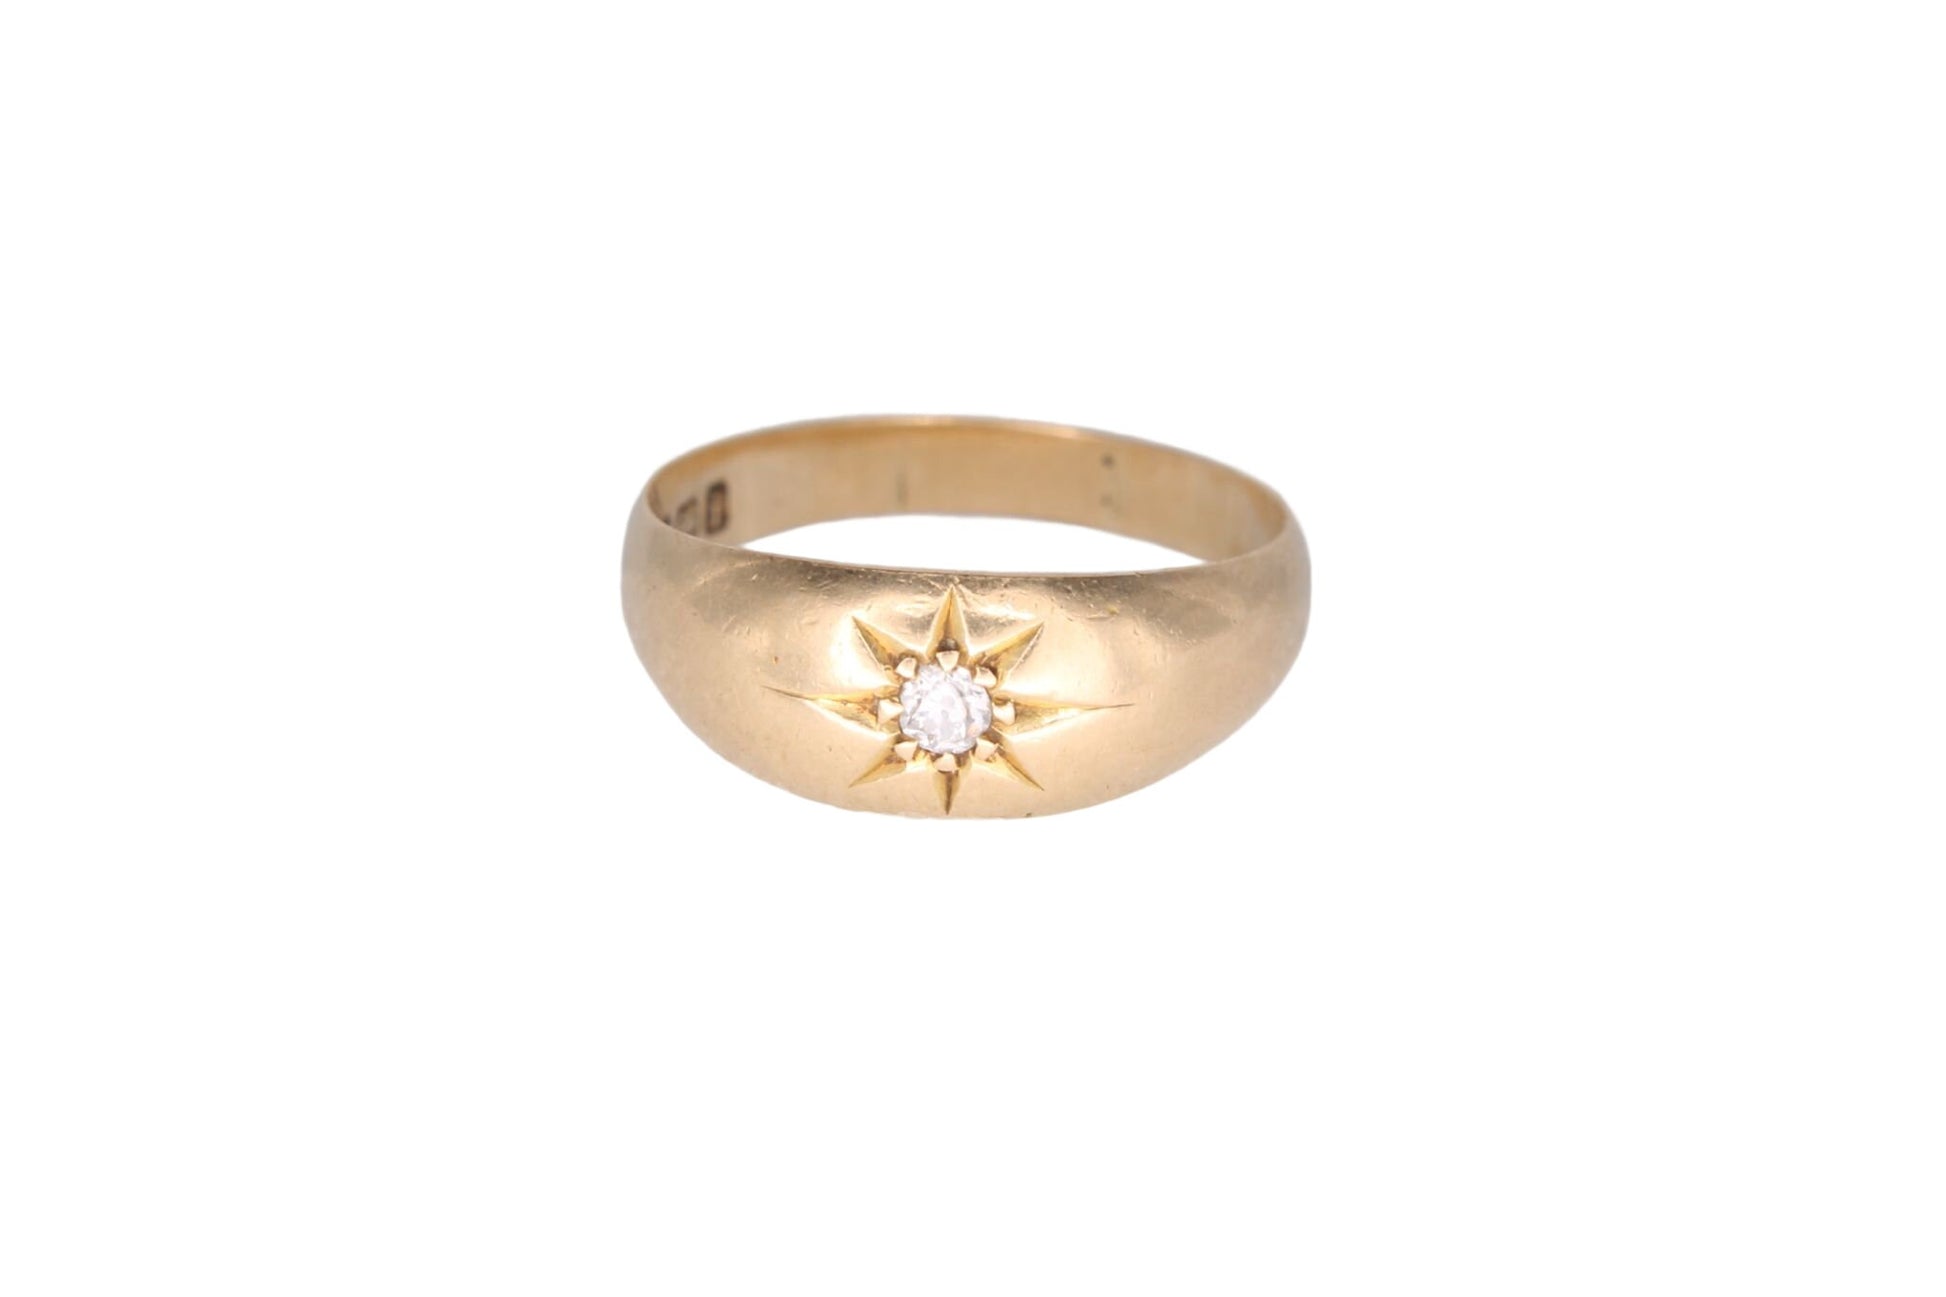 Antique-Edwardian-18ct-Gold-&-Diamond-Gypsy-Ring---1908